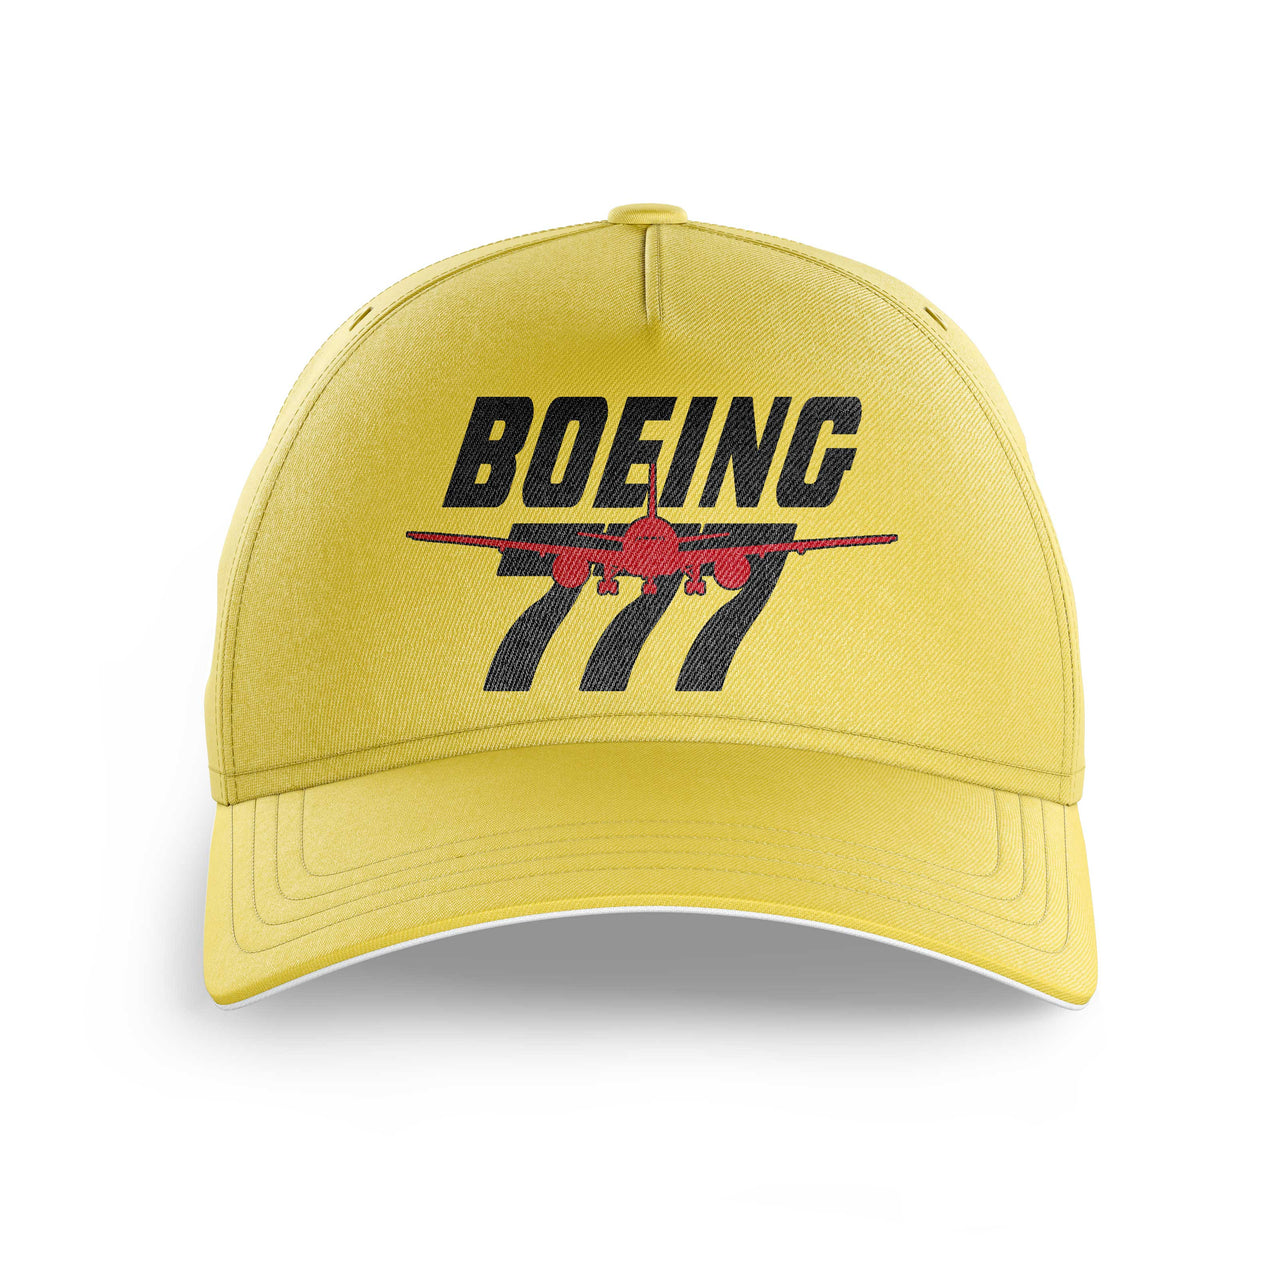 Amazing Boeing 777 Printed Hats